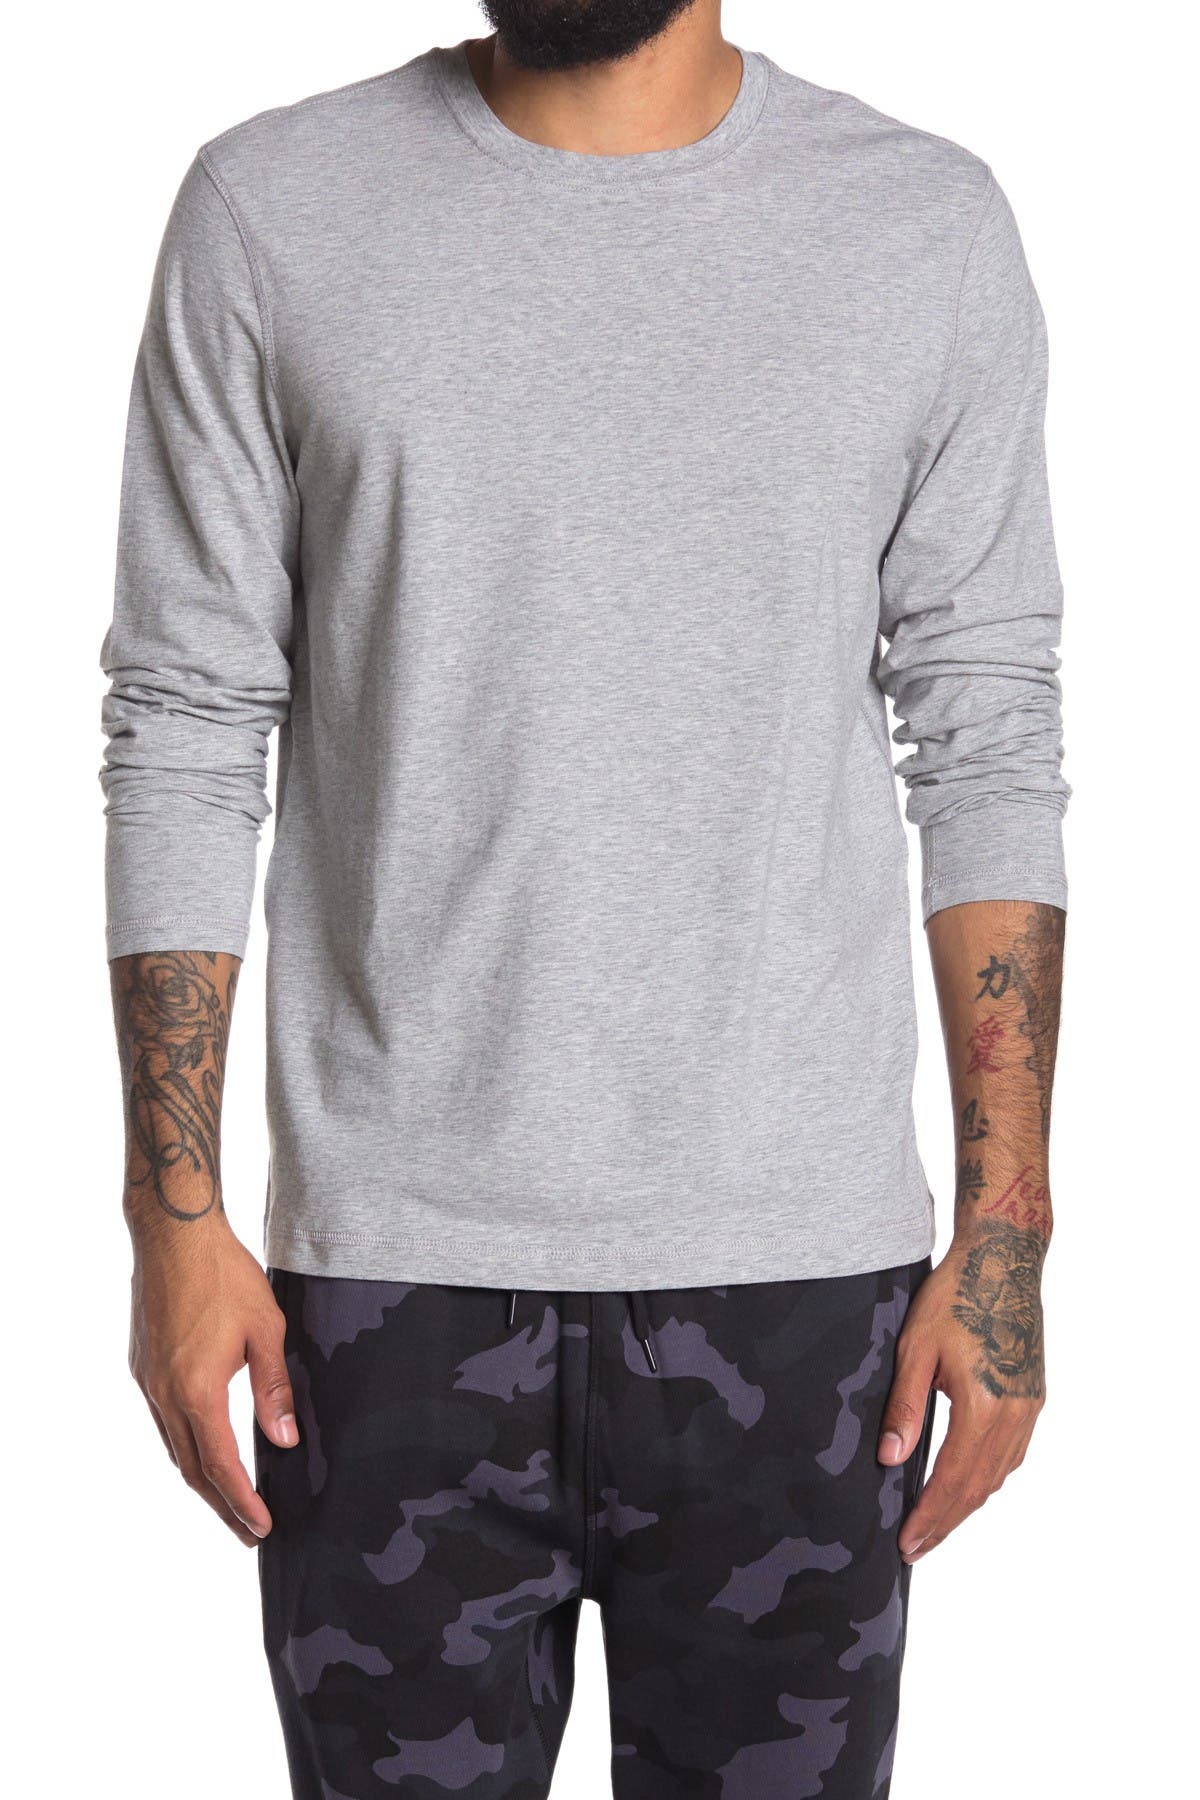 90 Degree By Reflex Crew Neck Long Sleeve T-shirt In Medium Grey3